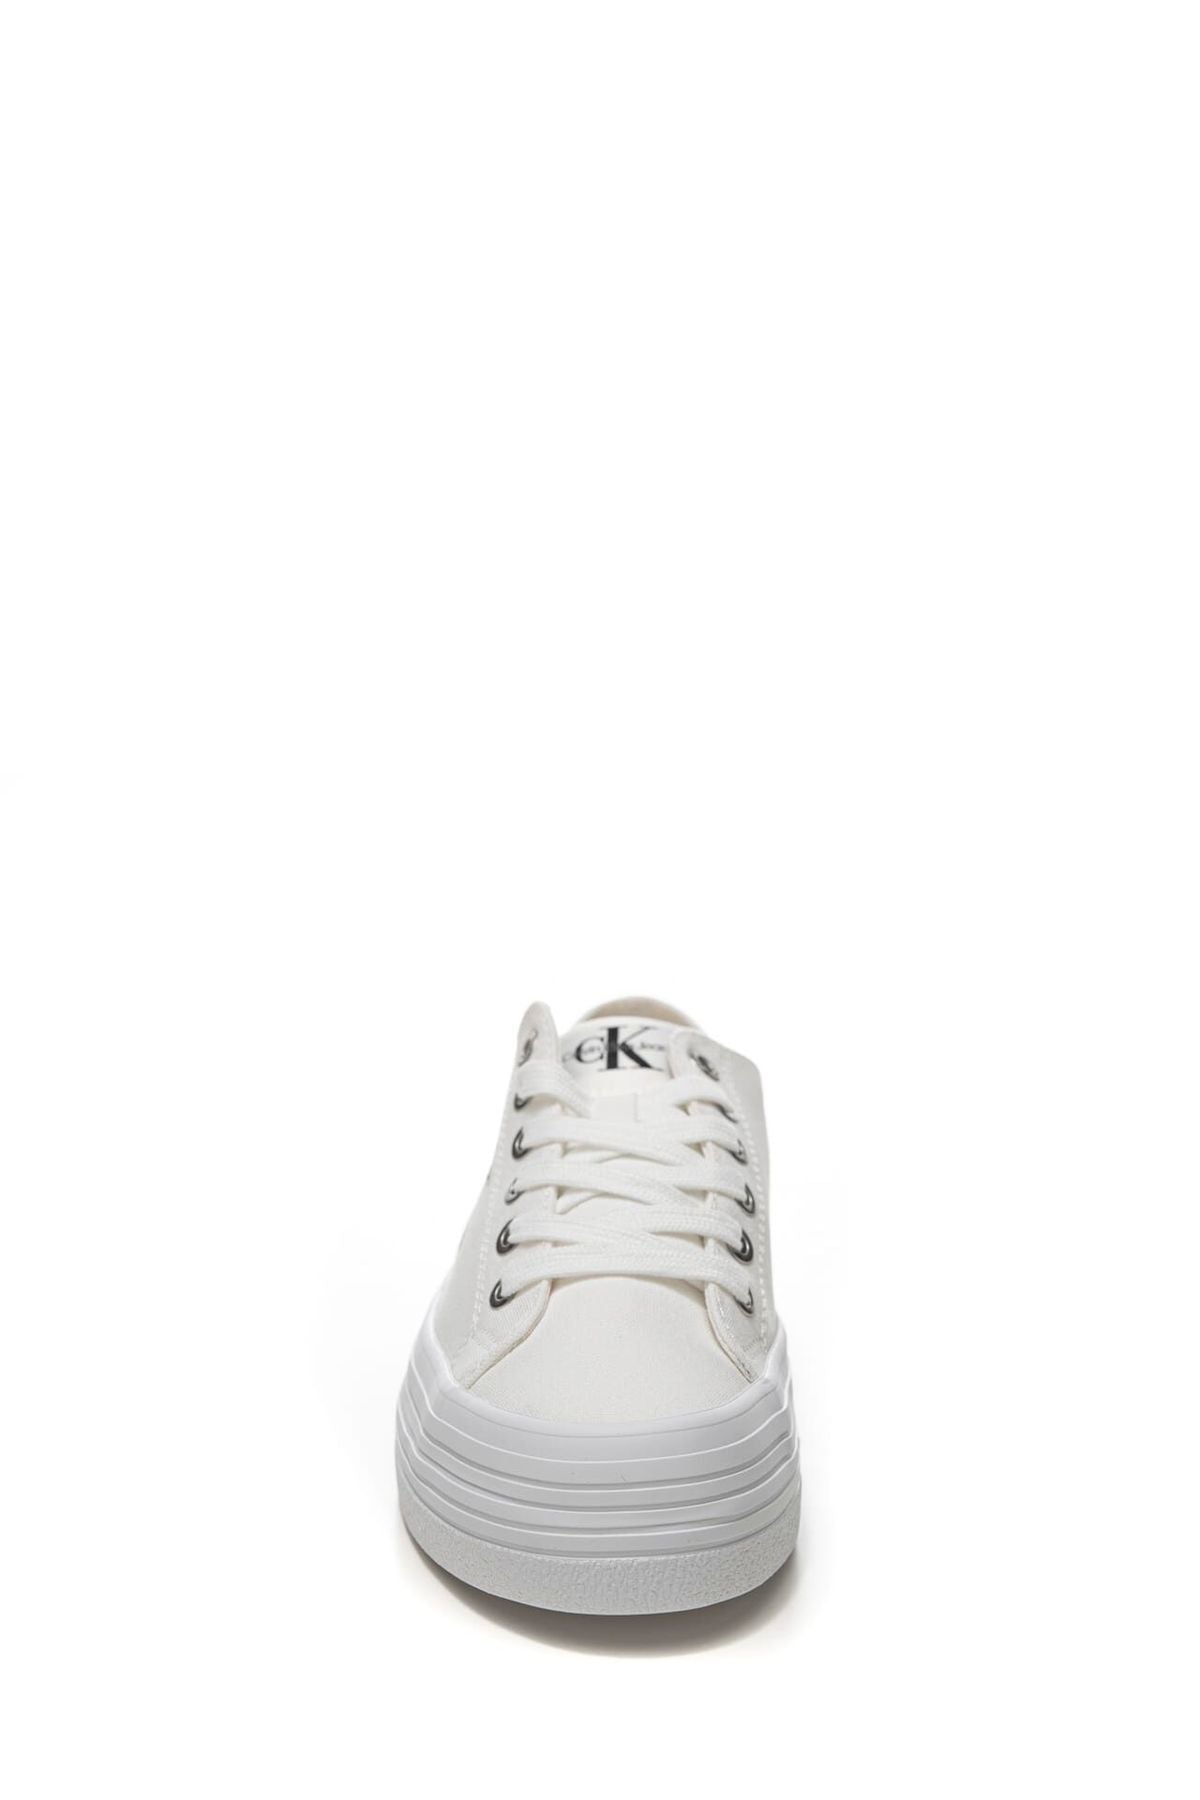 Sneakers Calvin Klein Donna Vulc Flatform Bianco